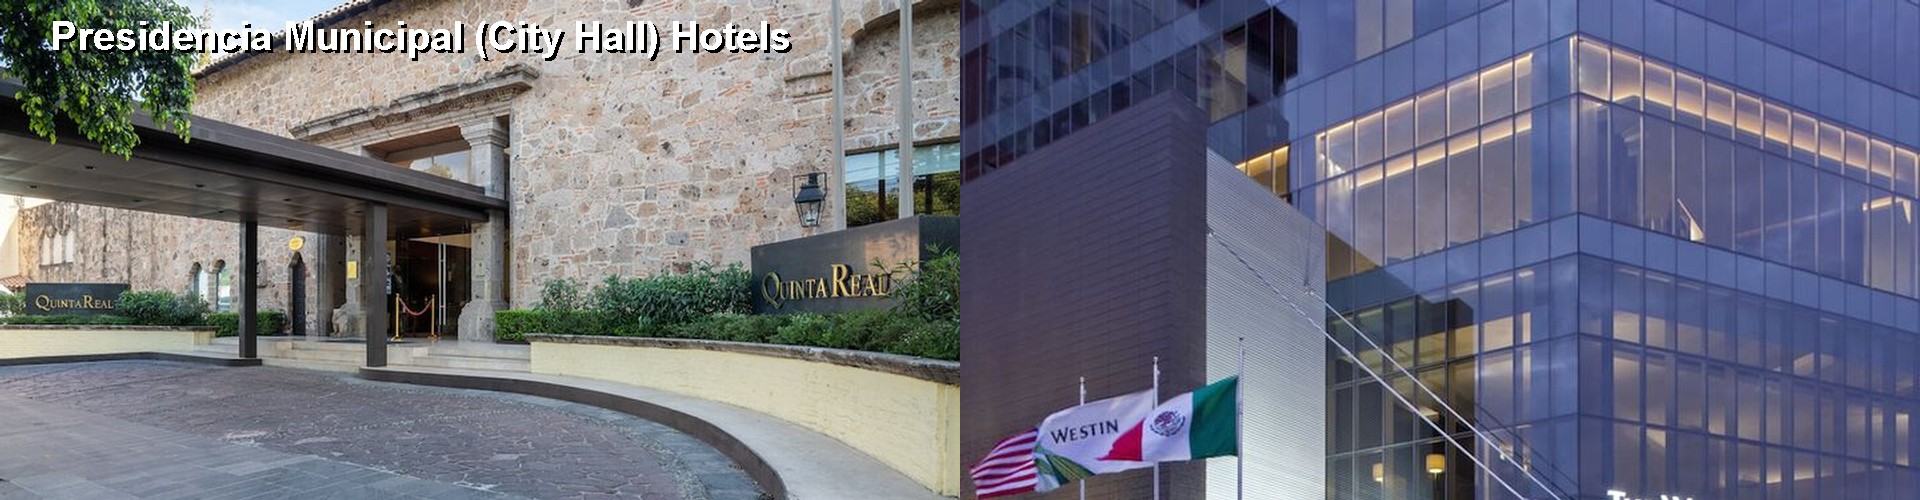 5 Best Hotels near Presidencia Municipal (City Hall)